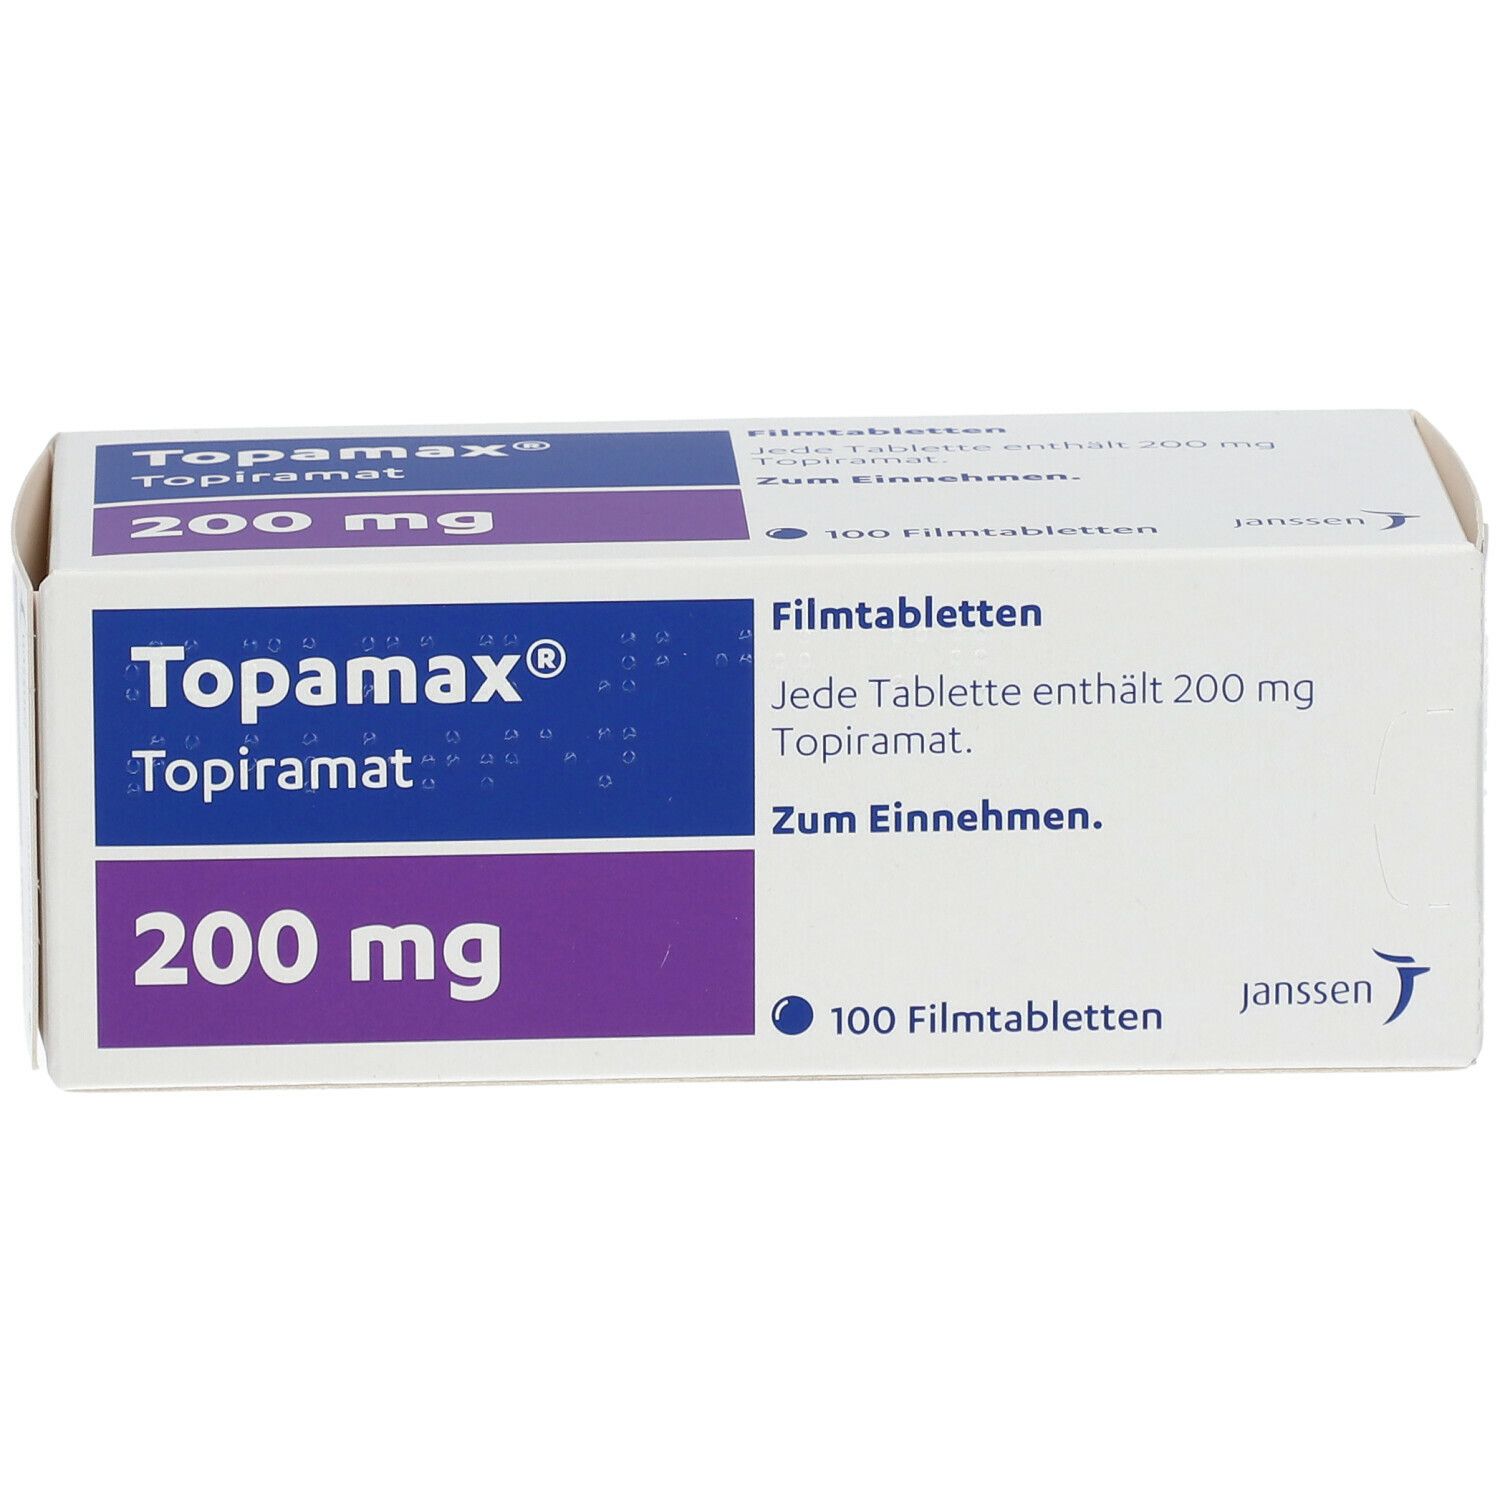 Topamax® 200 mg